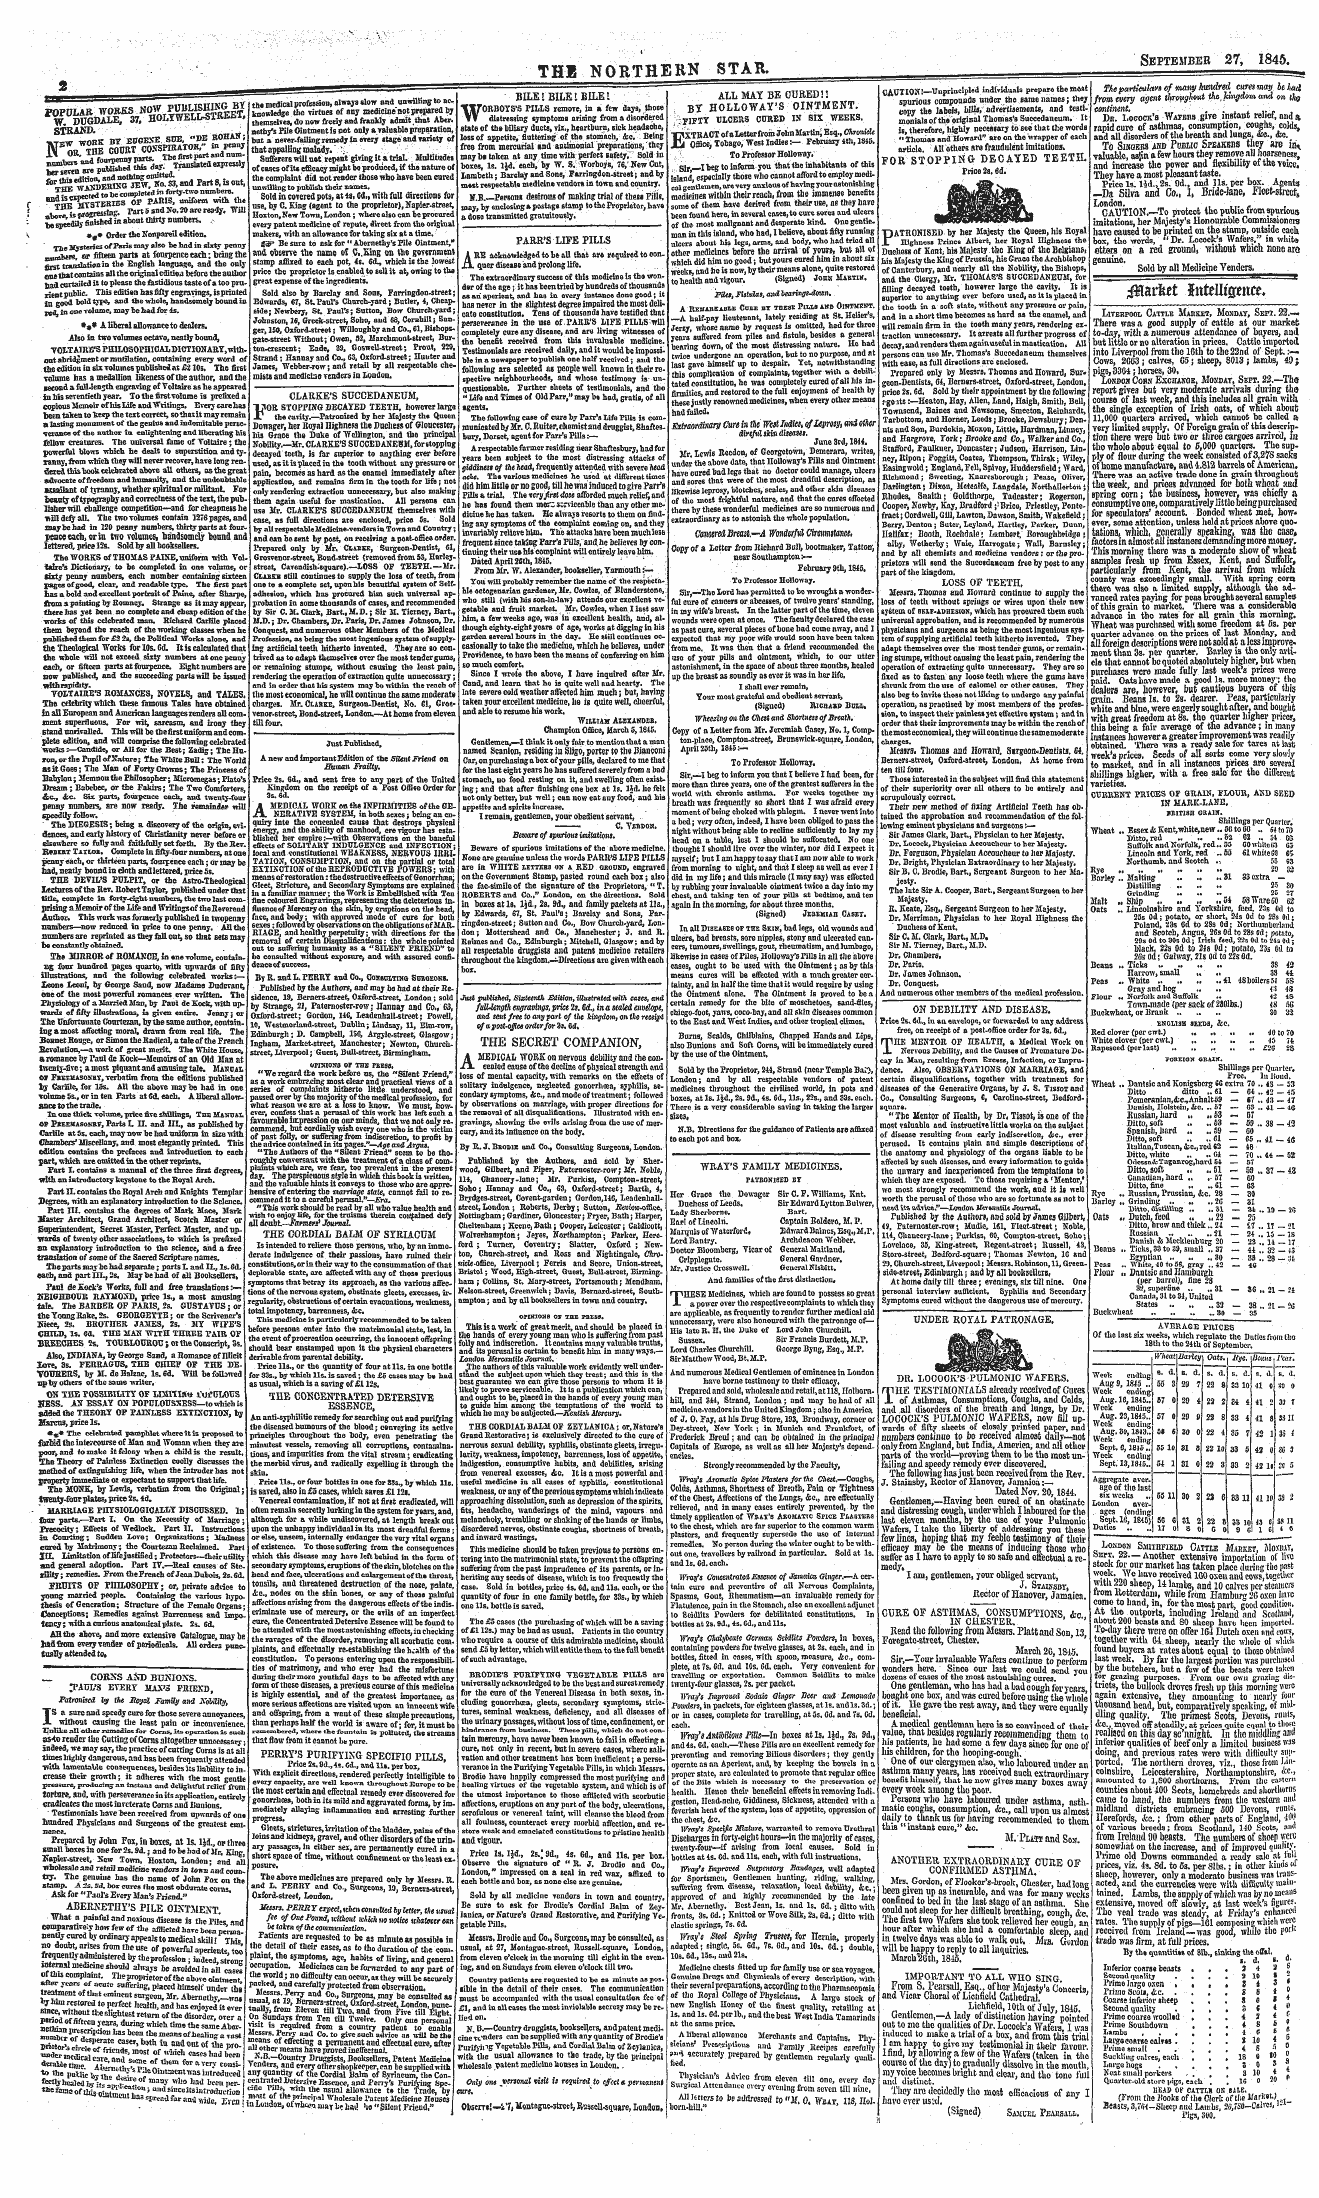 Northern Star (1837-1852): jS F Y, 2nd edition - Thb Northern Star. Seetembeb 27, 1845. 2...